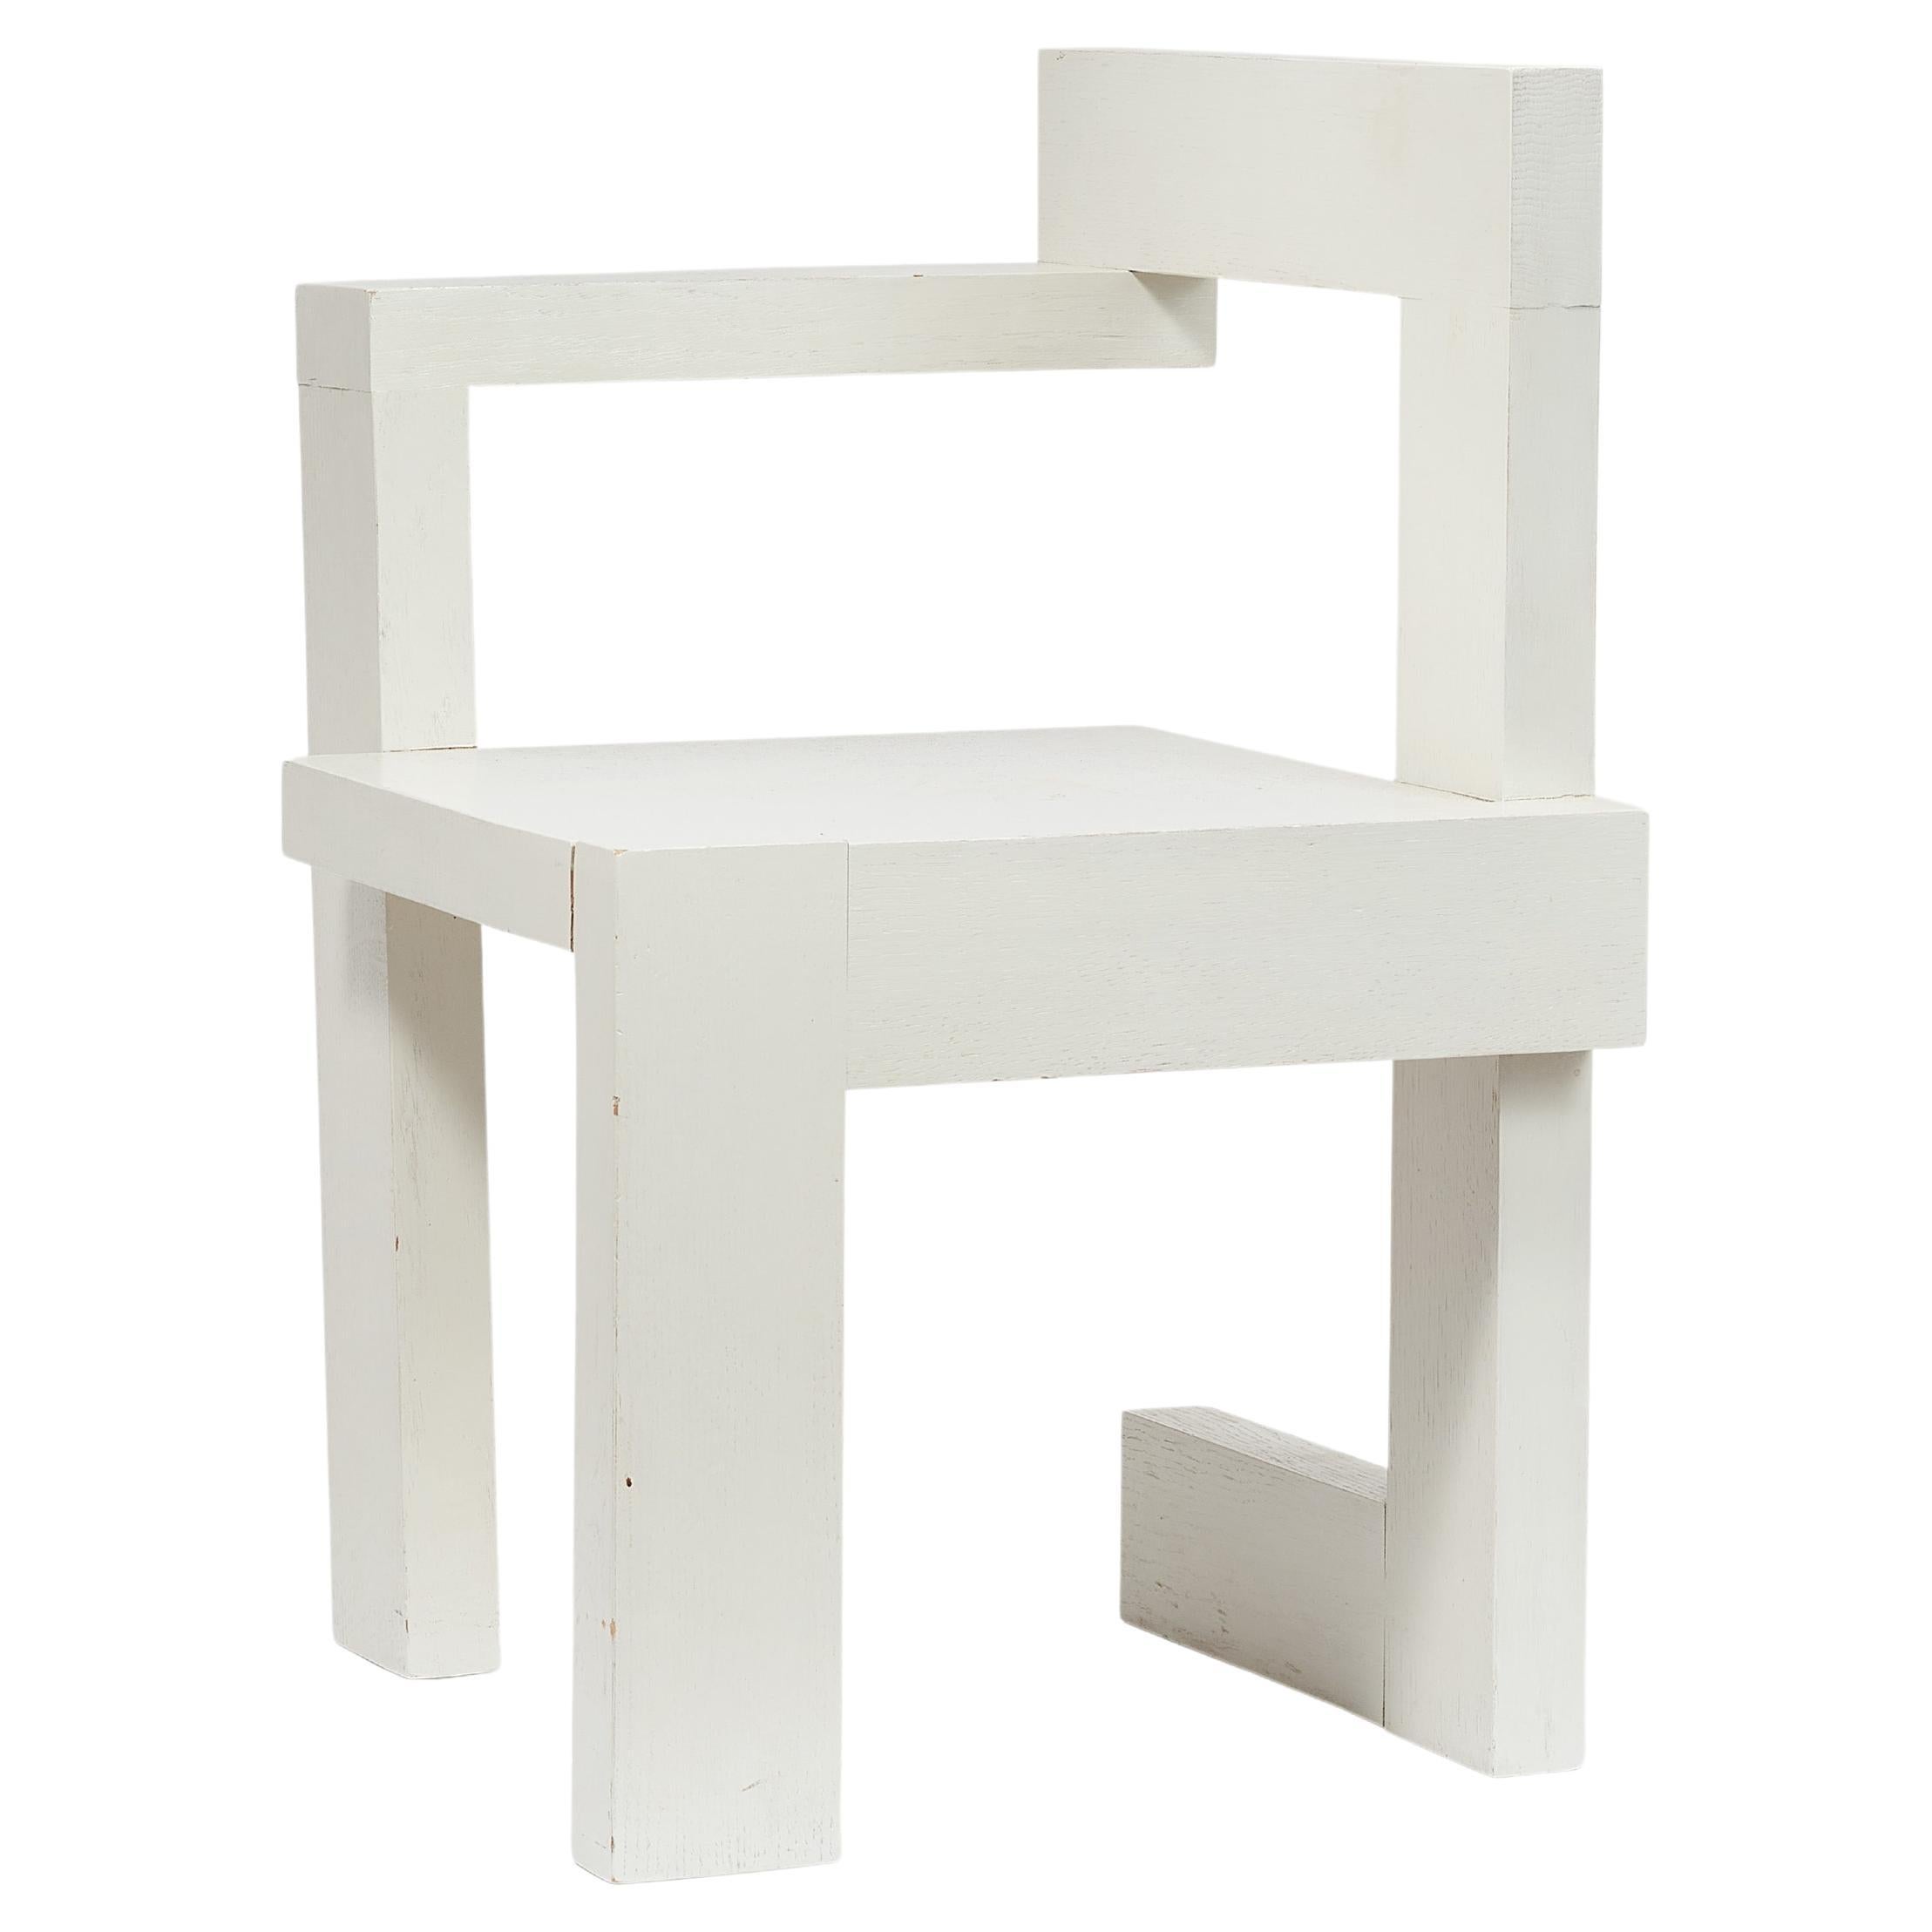 Gerrit Rietveld, Steltman Chair / Authentic 